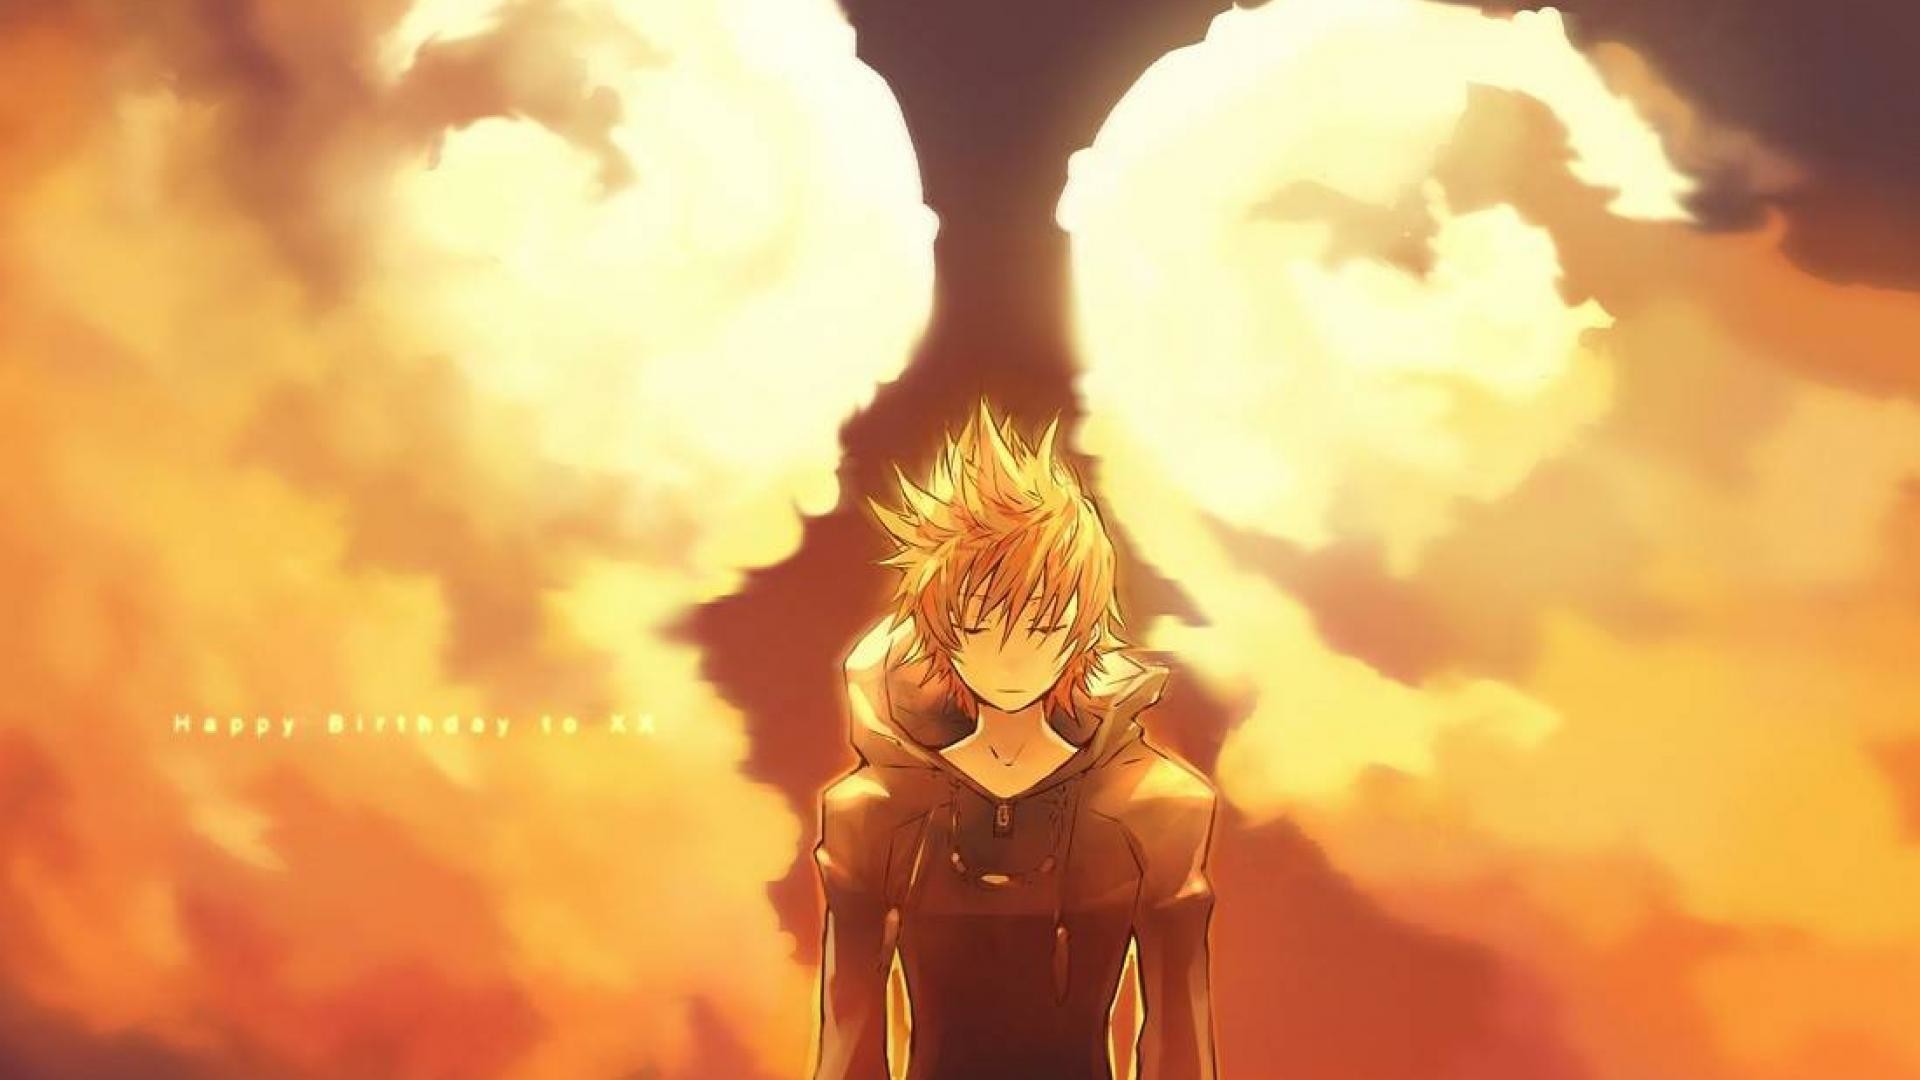 roxas wallpaper,anime,sky,cg artwork,explosion,fictional character